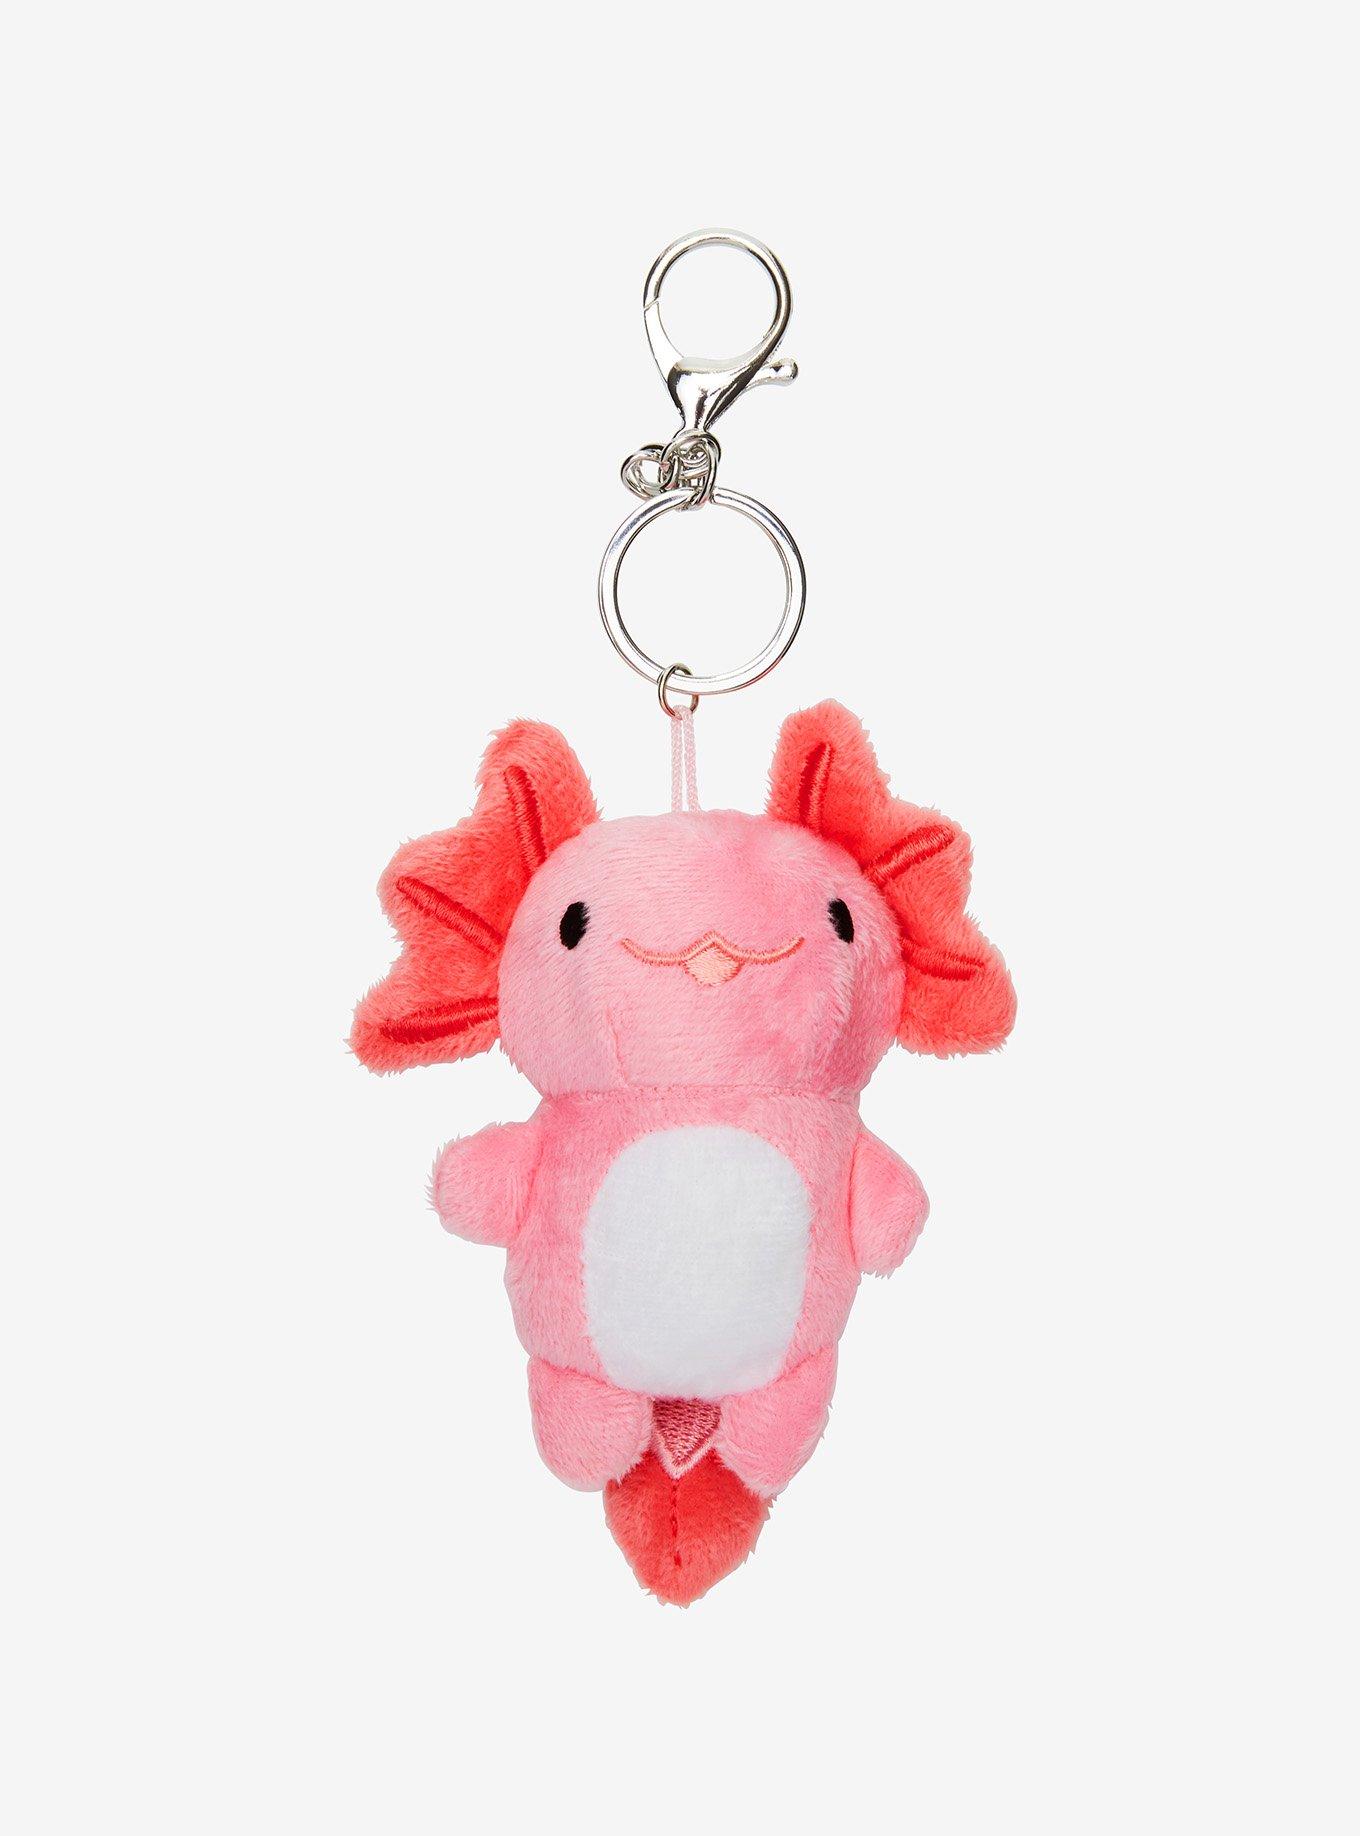 Little Axolotl Plush Bag Charm, Stuffed Animal Keychain